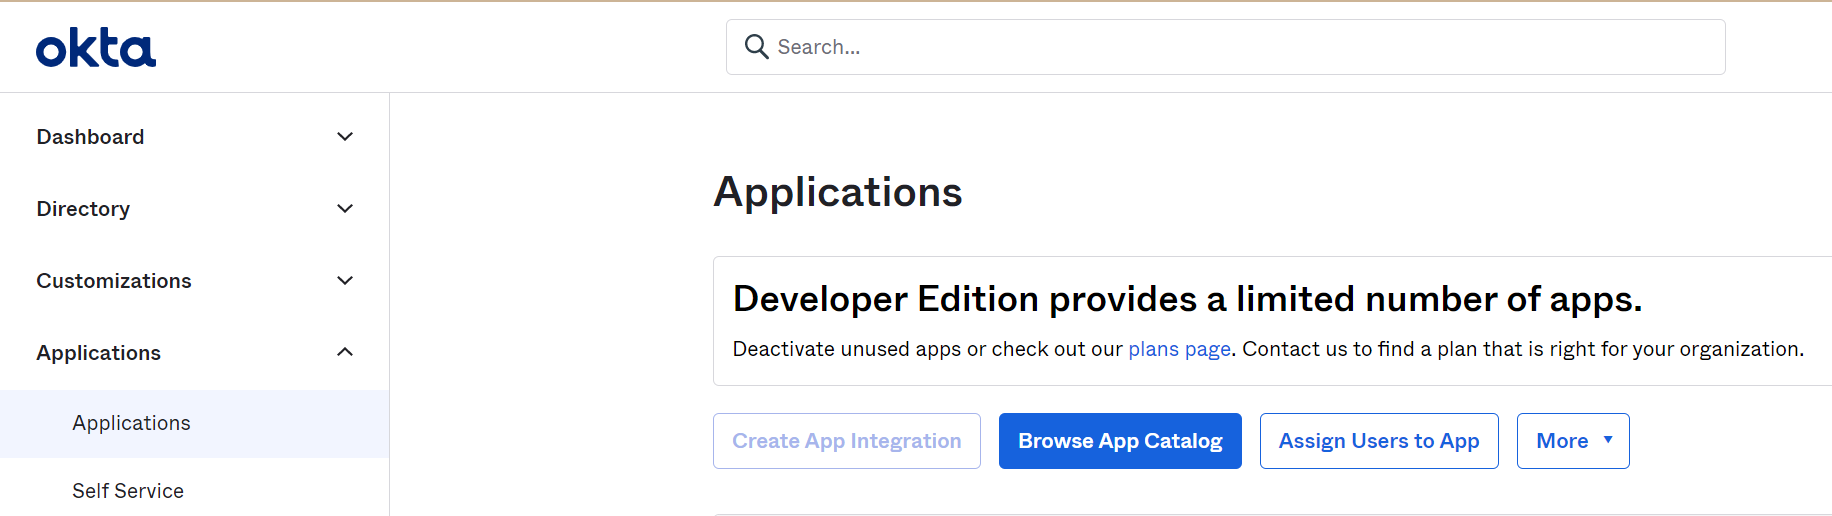 Okta application, with Browse App Catalog button highlighted